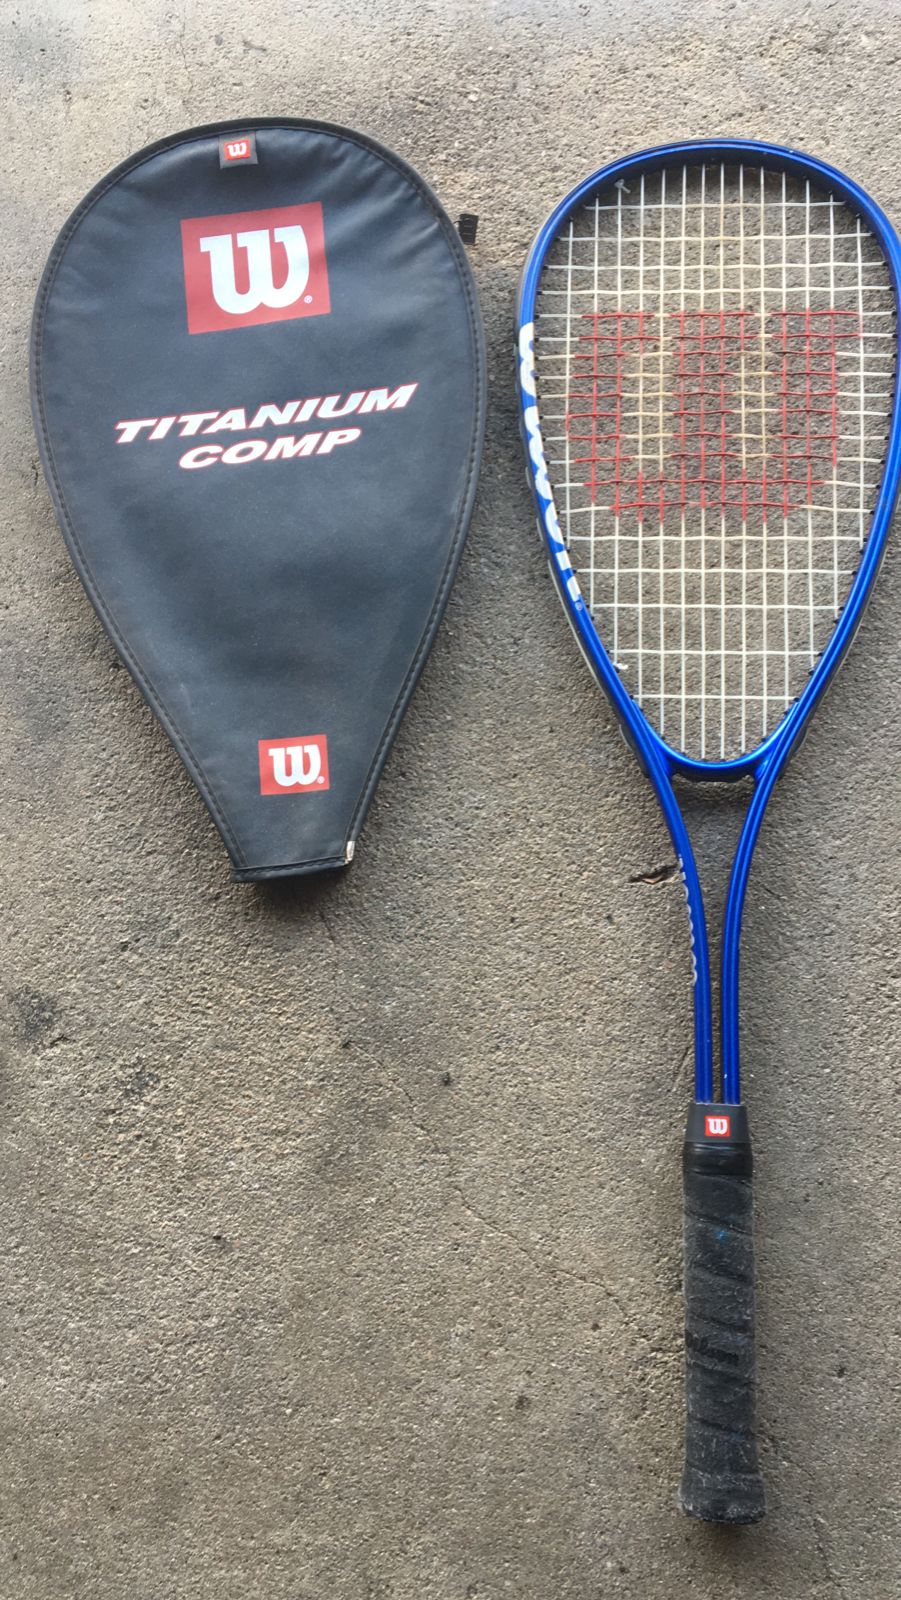 Wilson Titanium comp double beam Squash racquet | Junk Mail